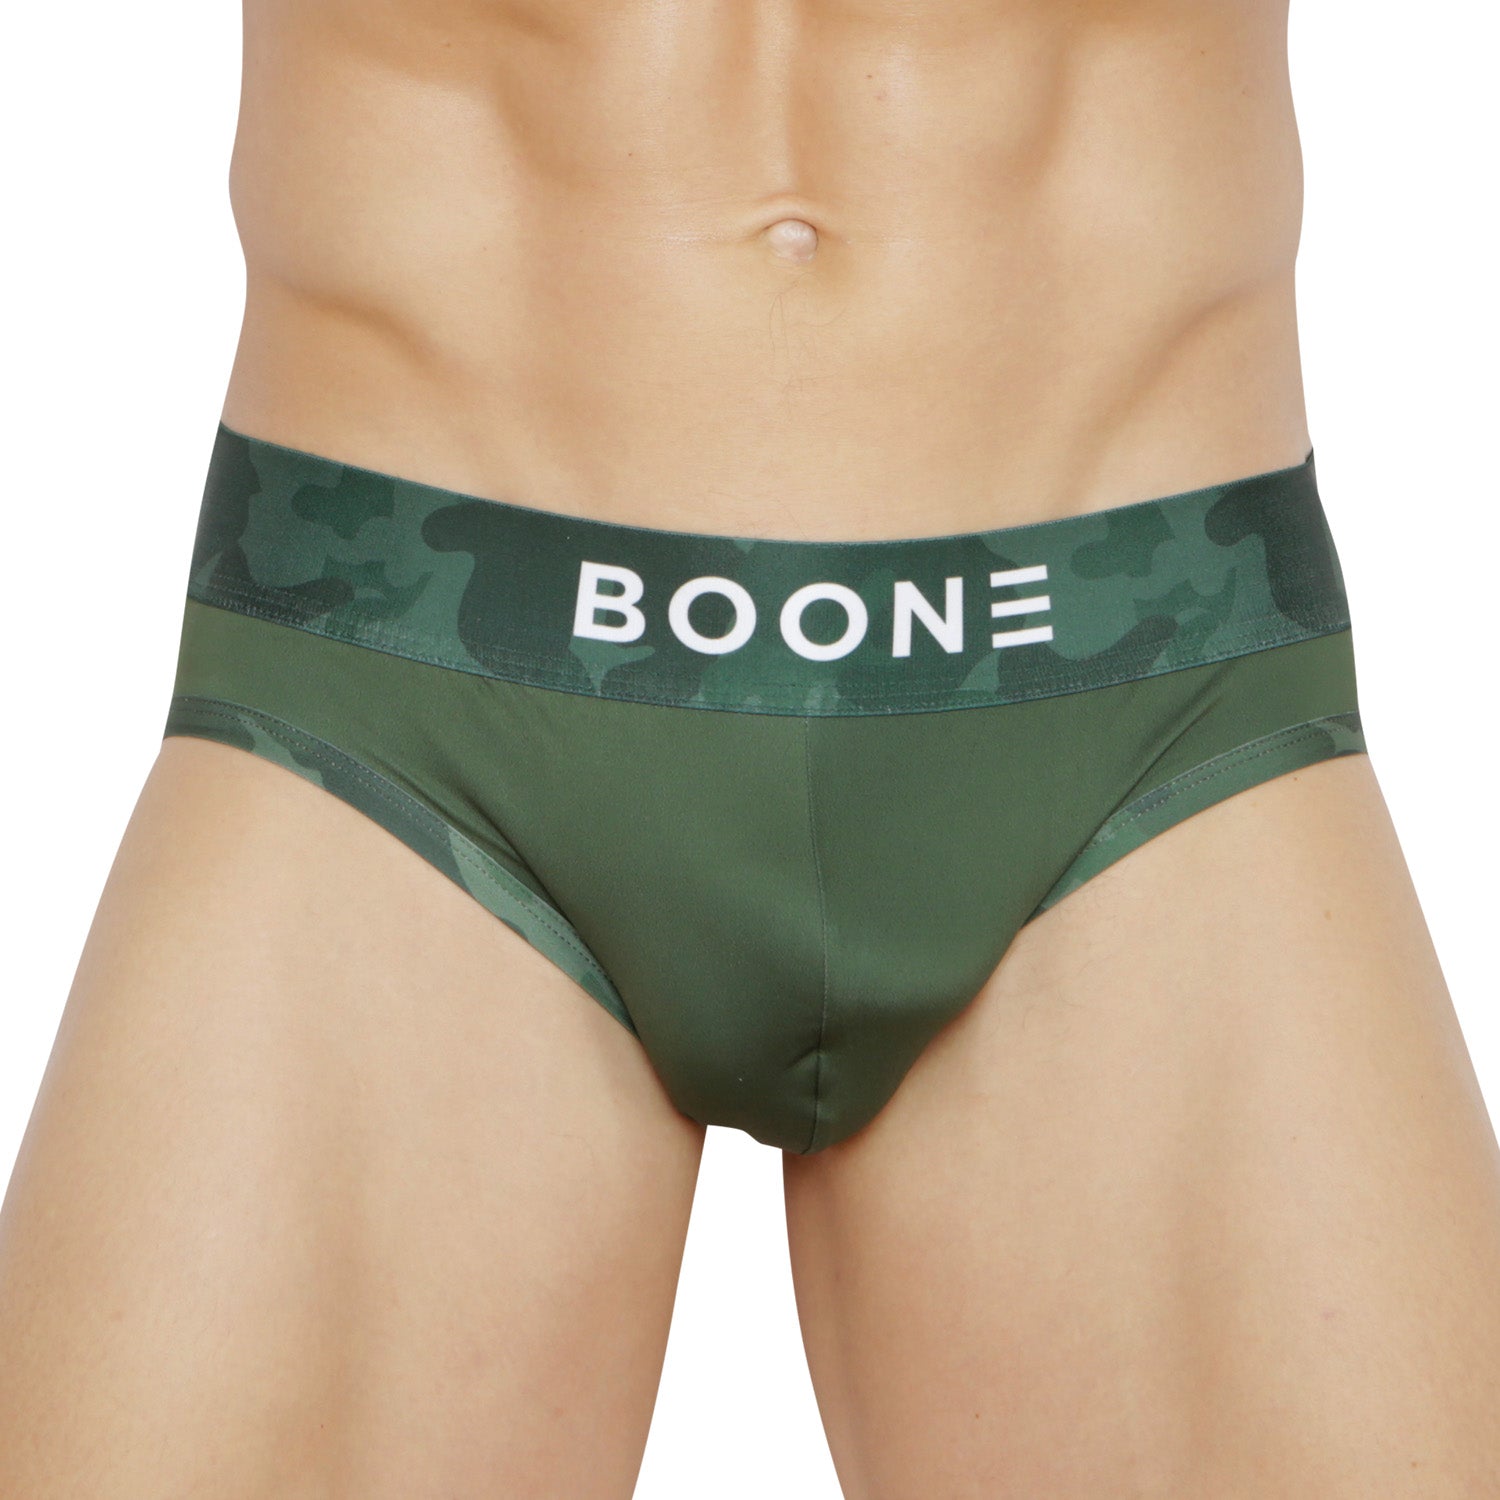 Marshall_designer underwear for men – Boone Collections